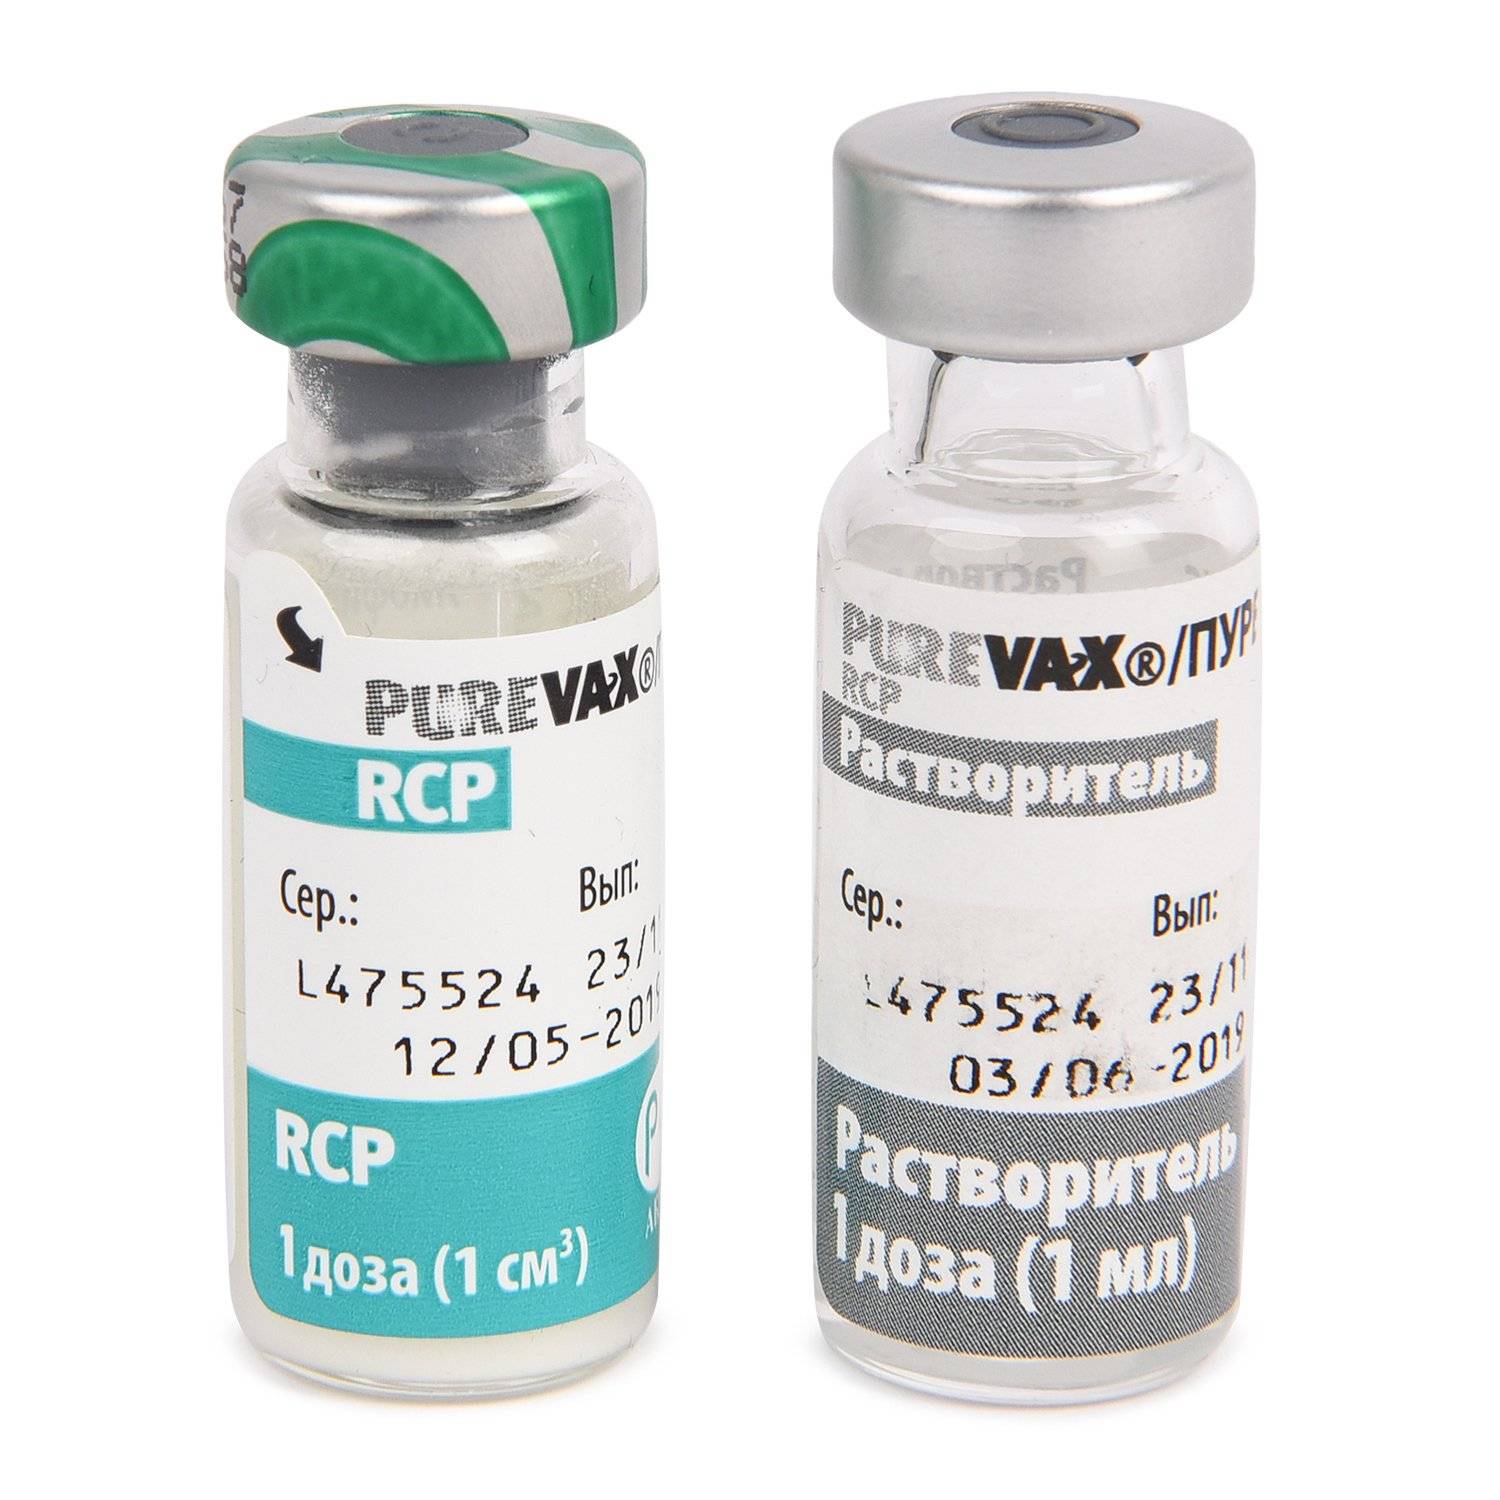 Пуревакс felv (purevax felv) - вакцина против лейкоза кошек, инструкция